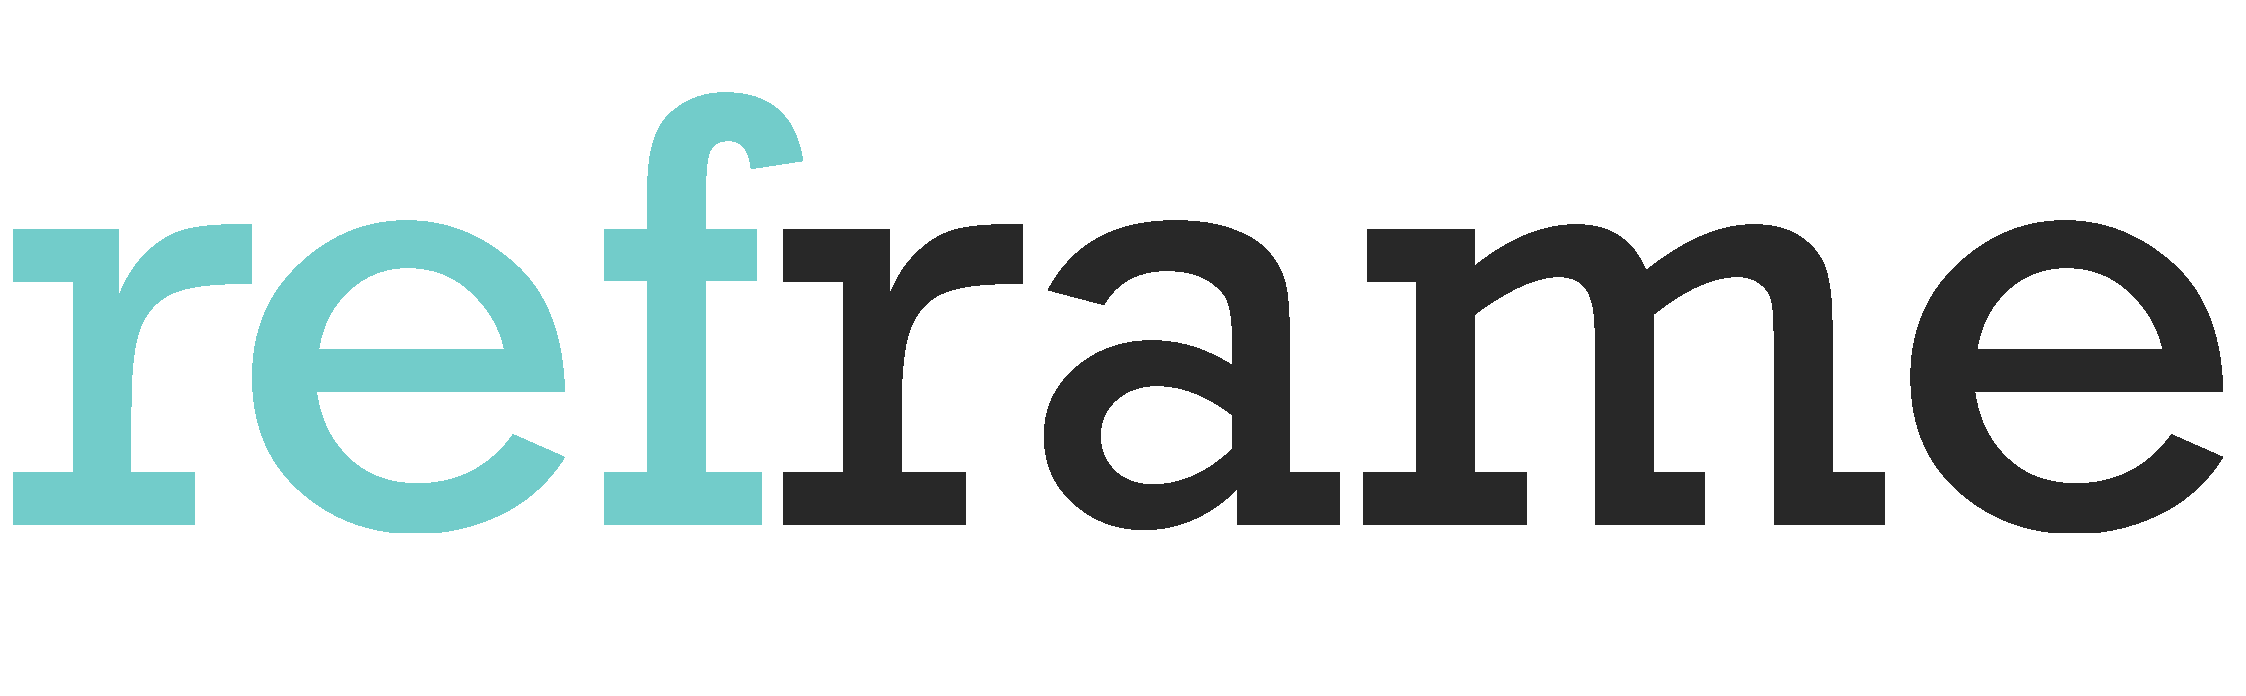 Reframe Logo